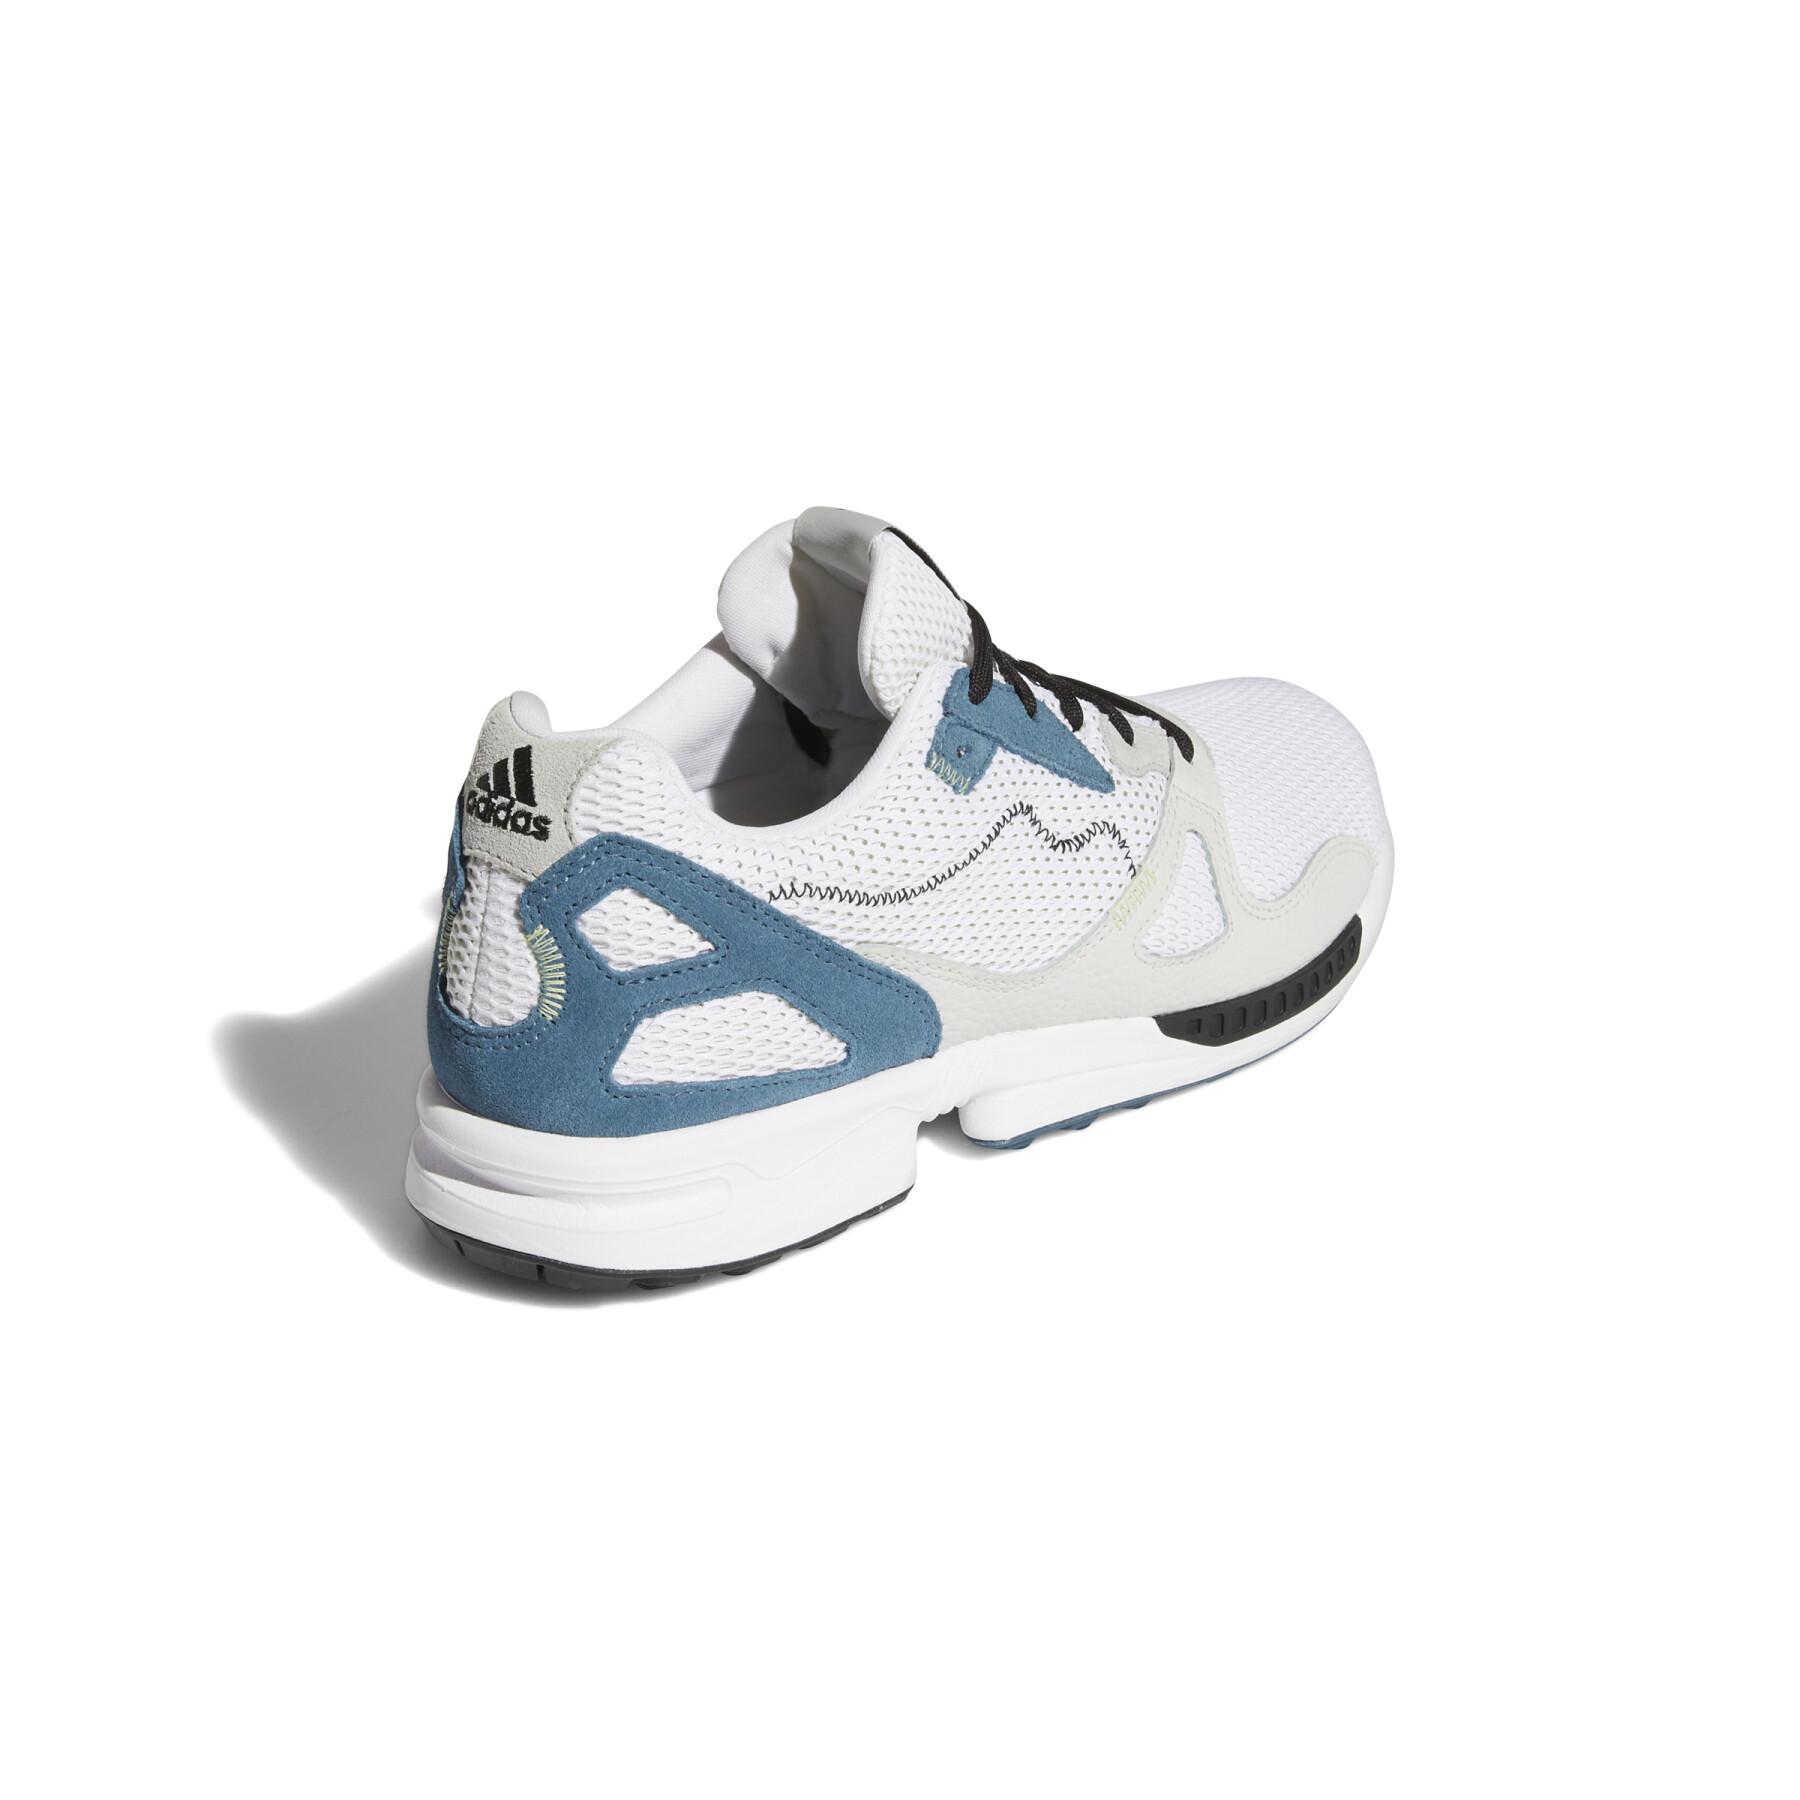 Schuhe adidas Adicross ZX Primeblue